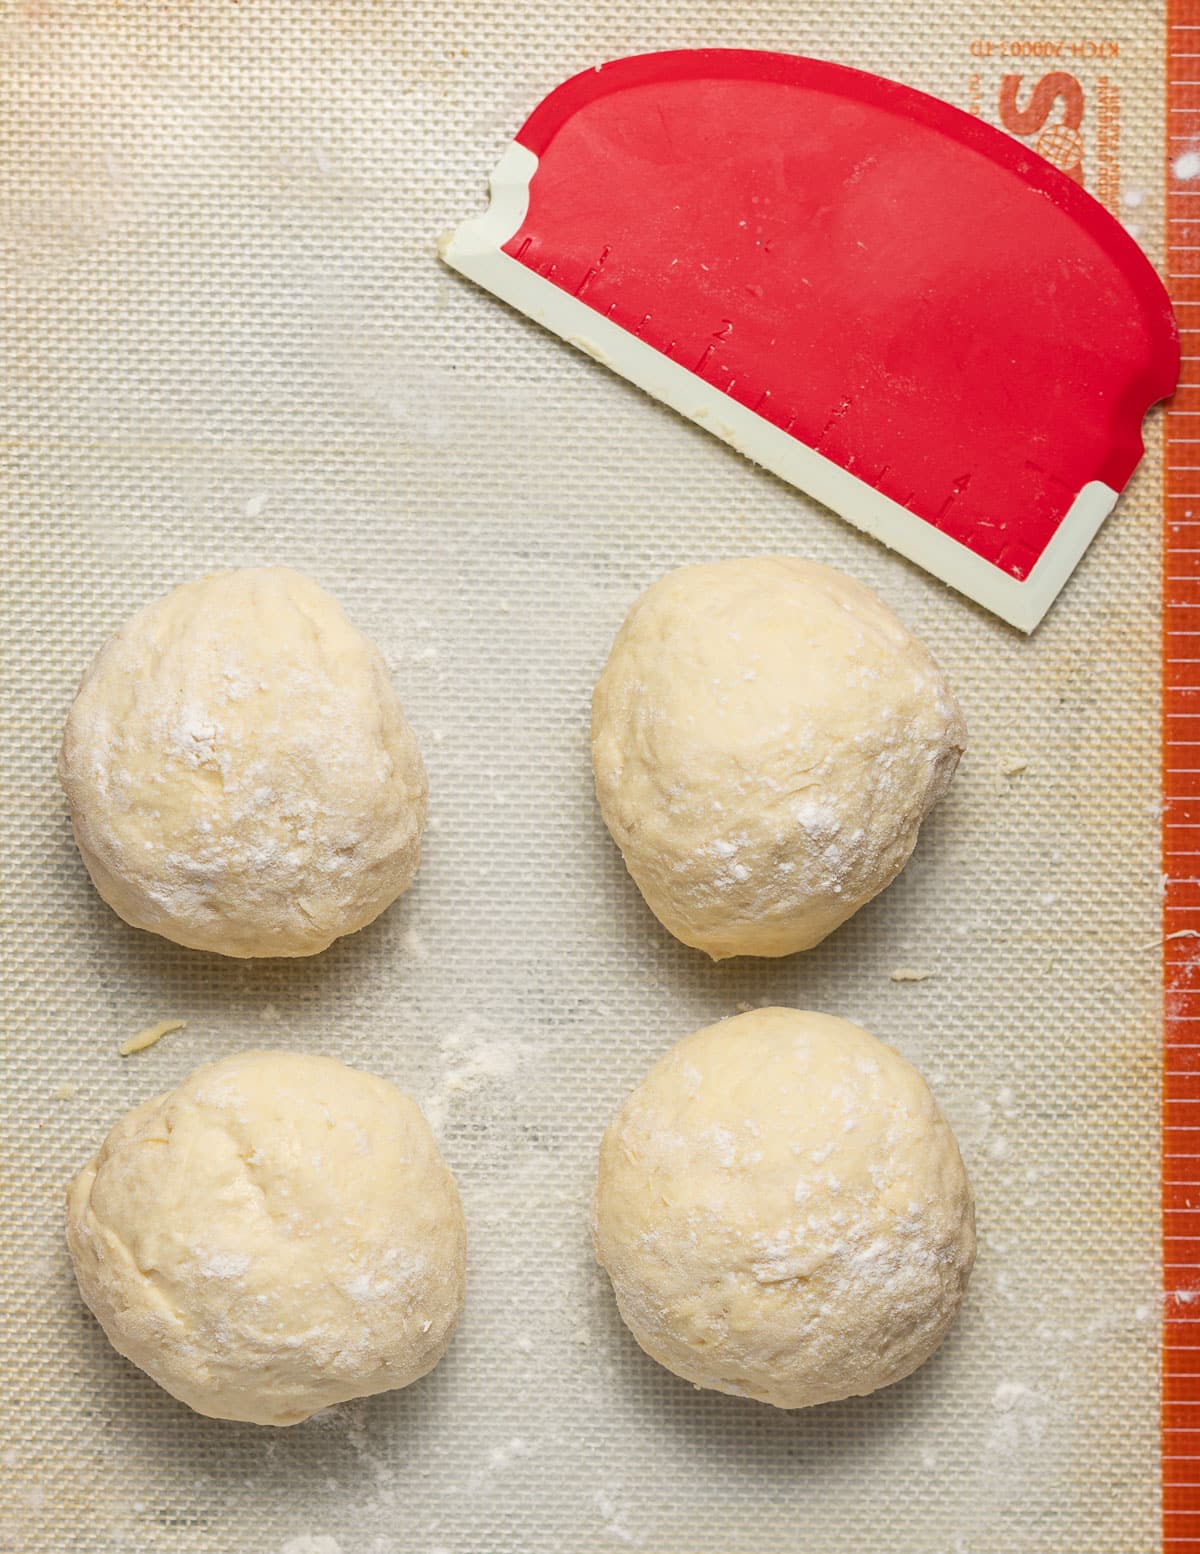 4 balls of dough